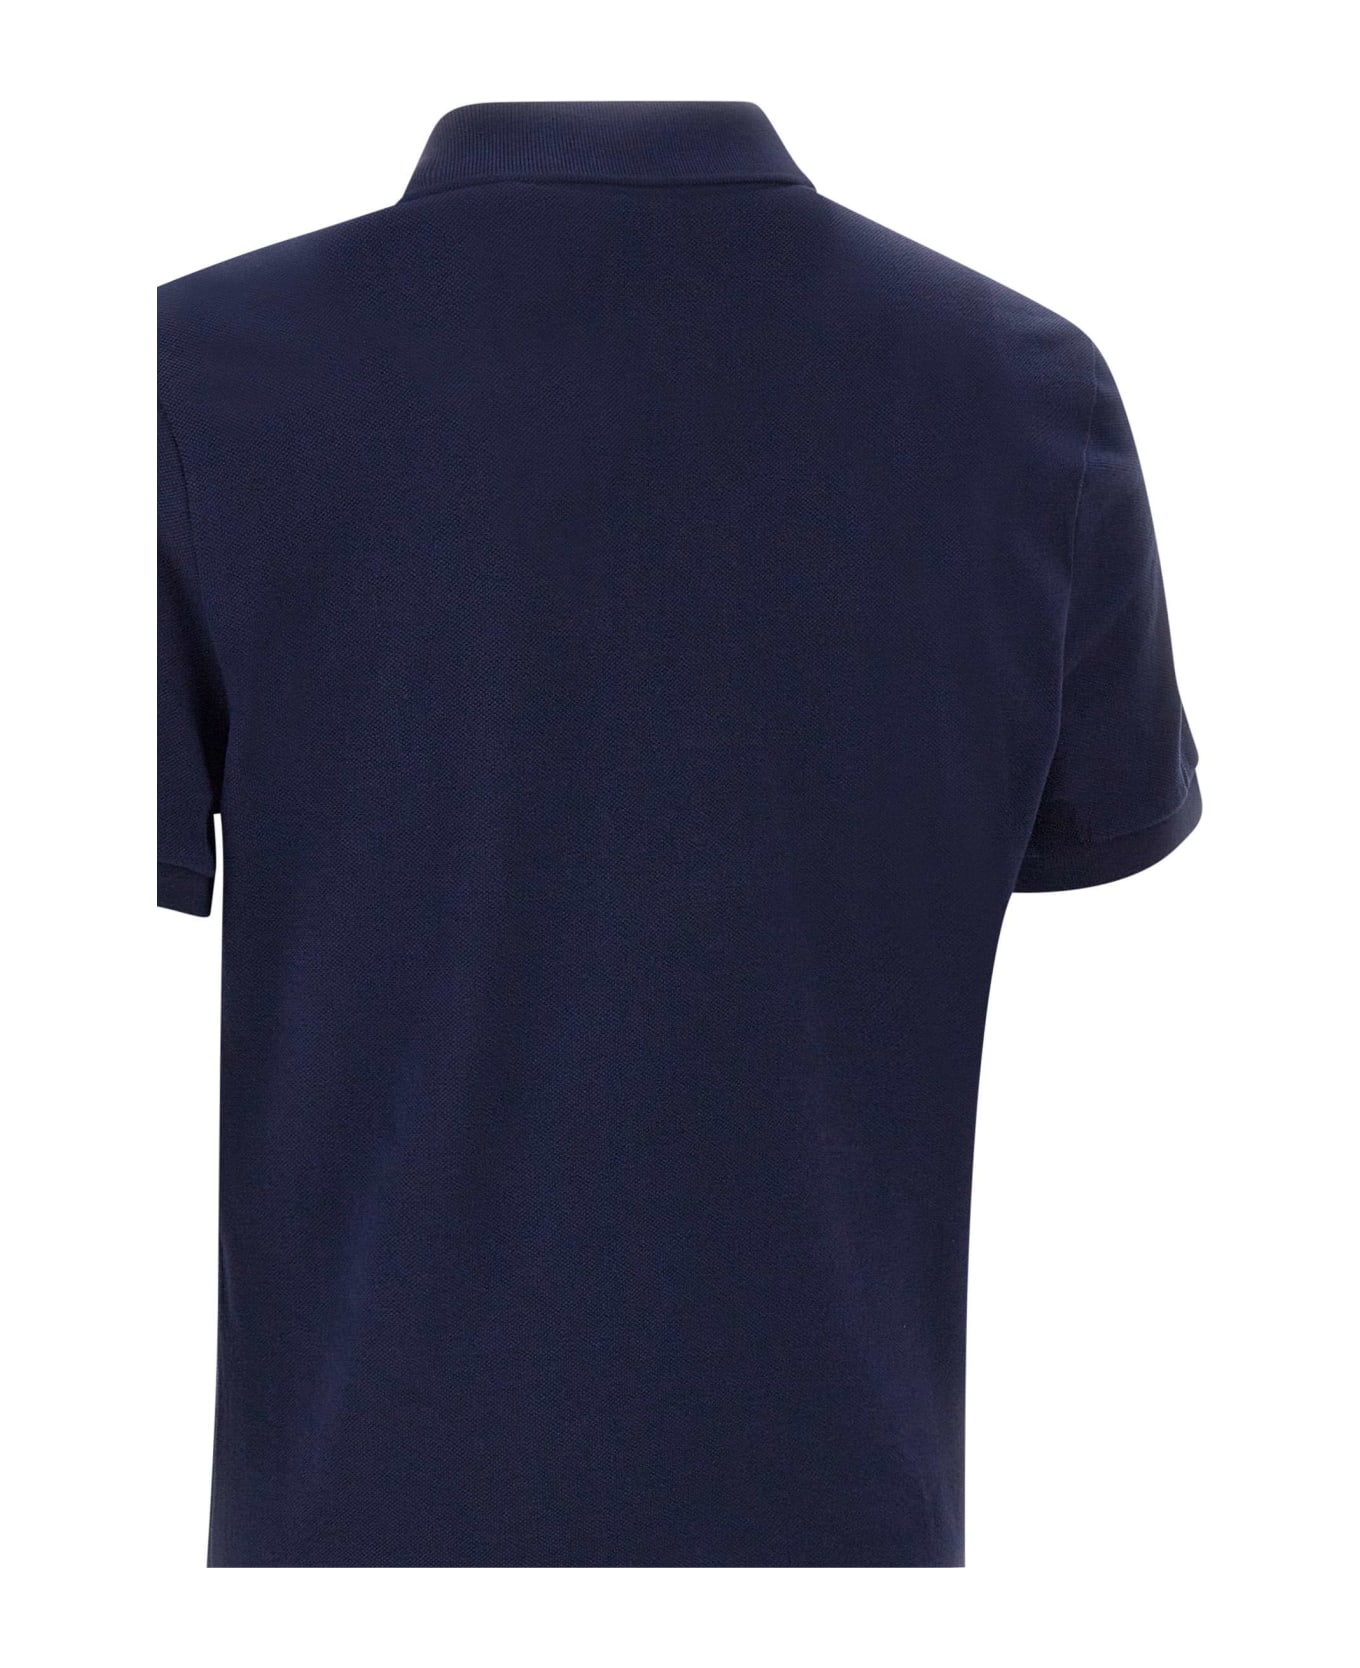 Lacoste Cotton Polo Shirt - BLUE